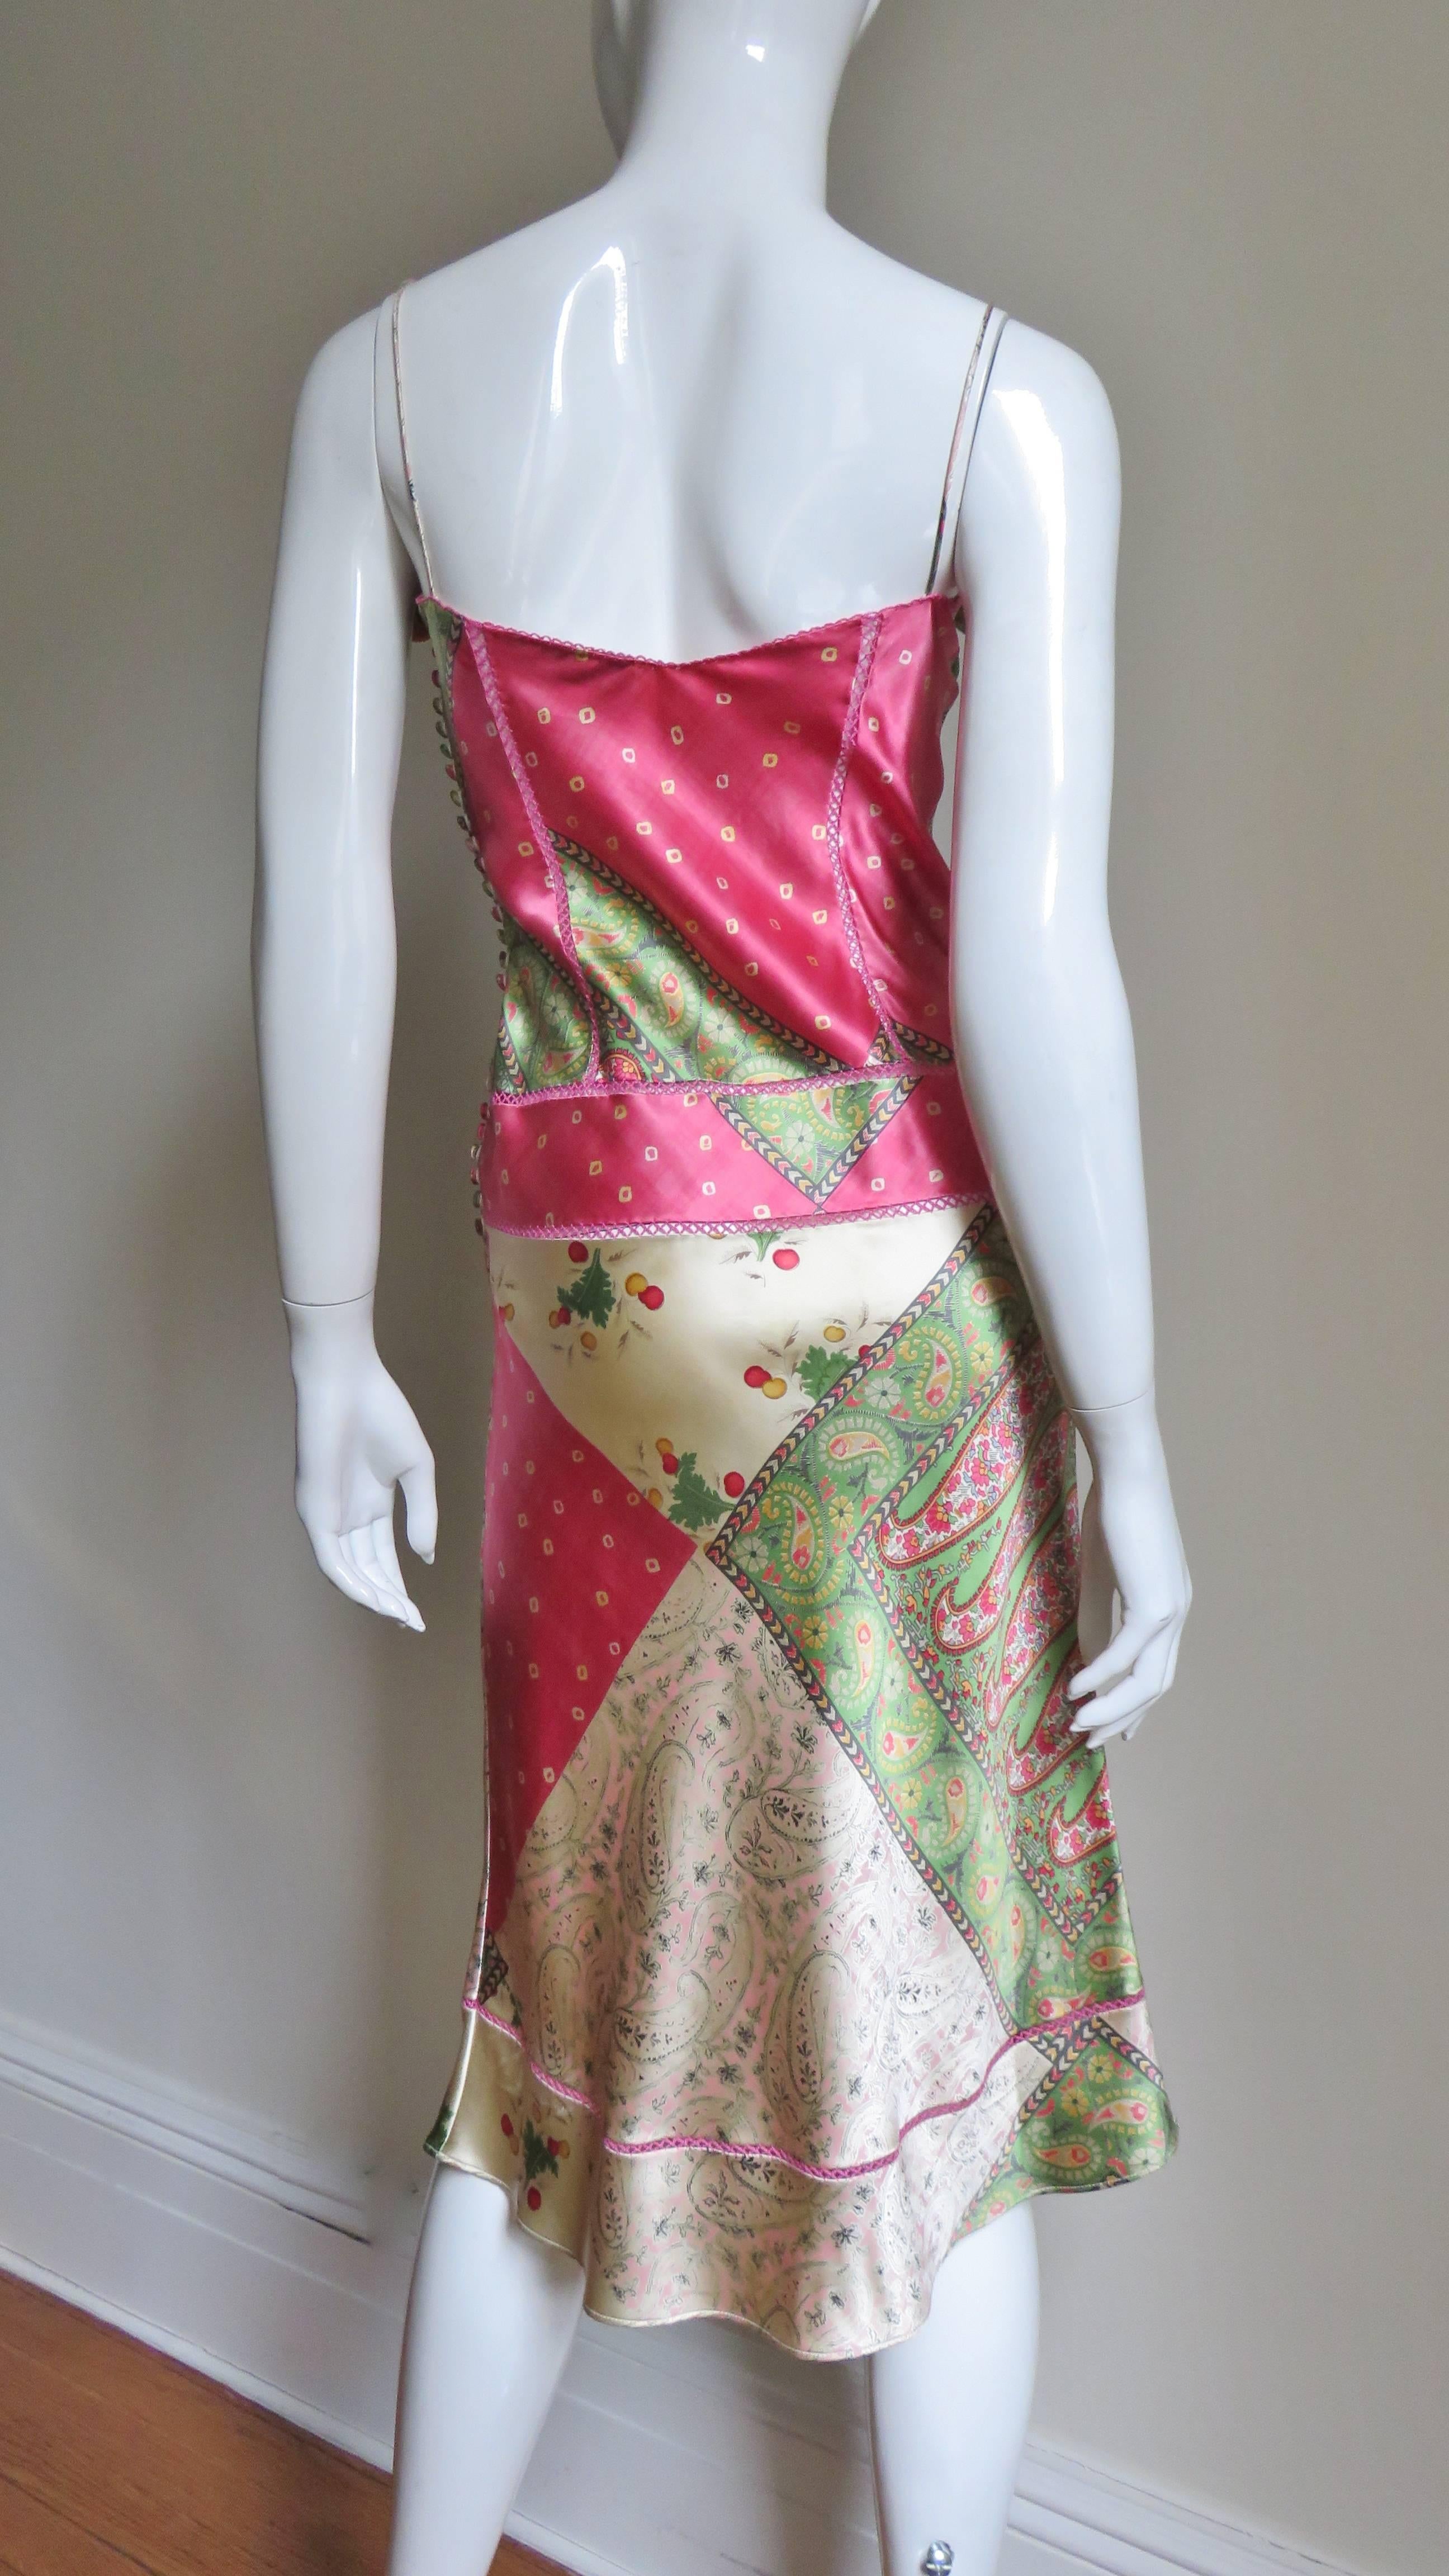 John Galliano for Christian Dior S/S 2004 Mixed Print Silk Slip Dress For Sale 3